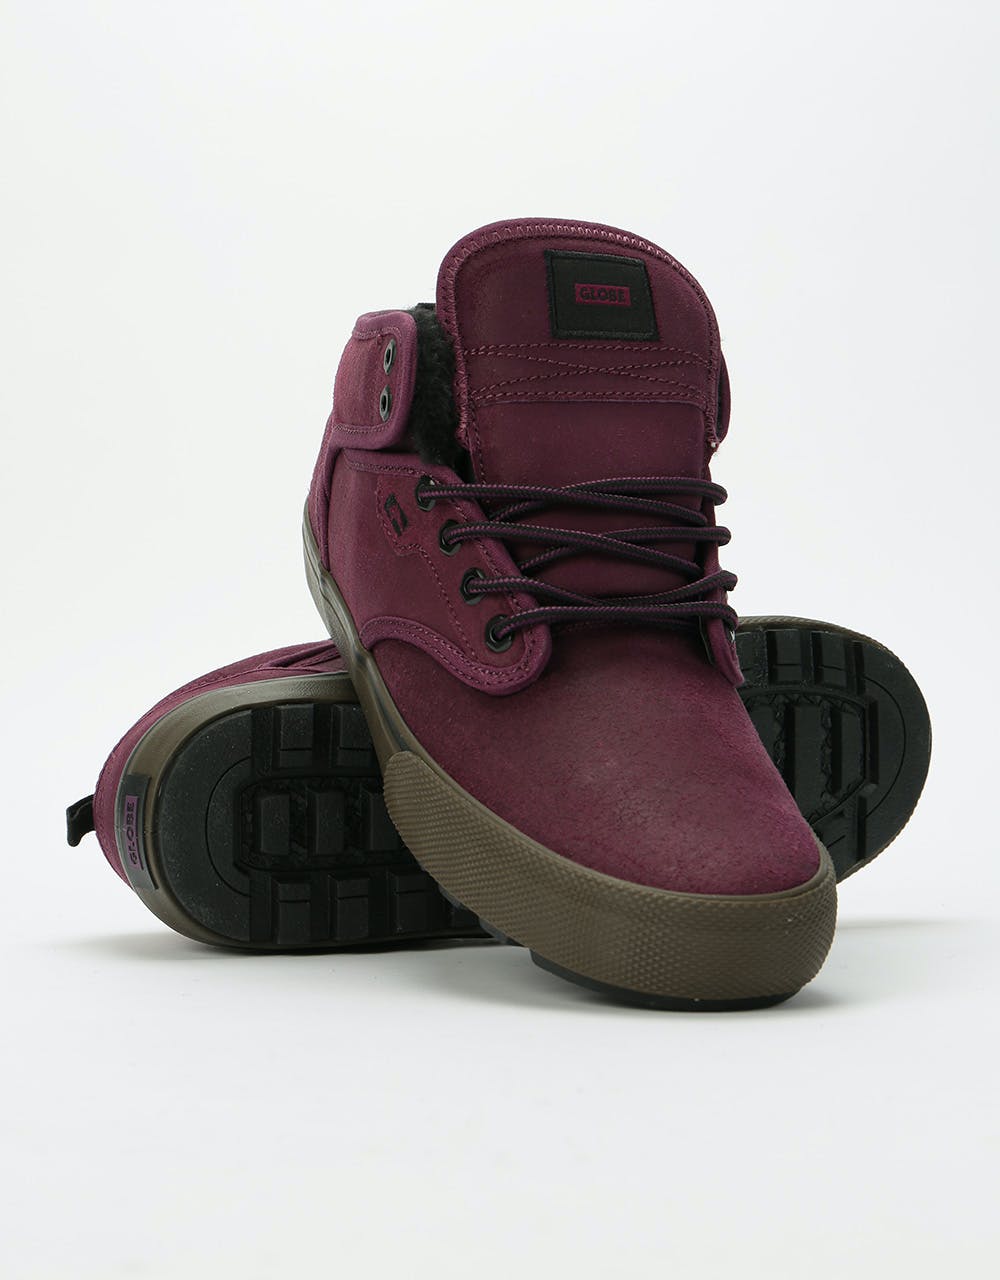 Globe Motley Mid Skate Shoes - Plum/Black/Fur